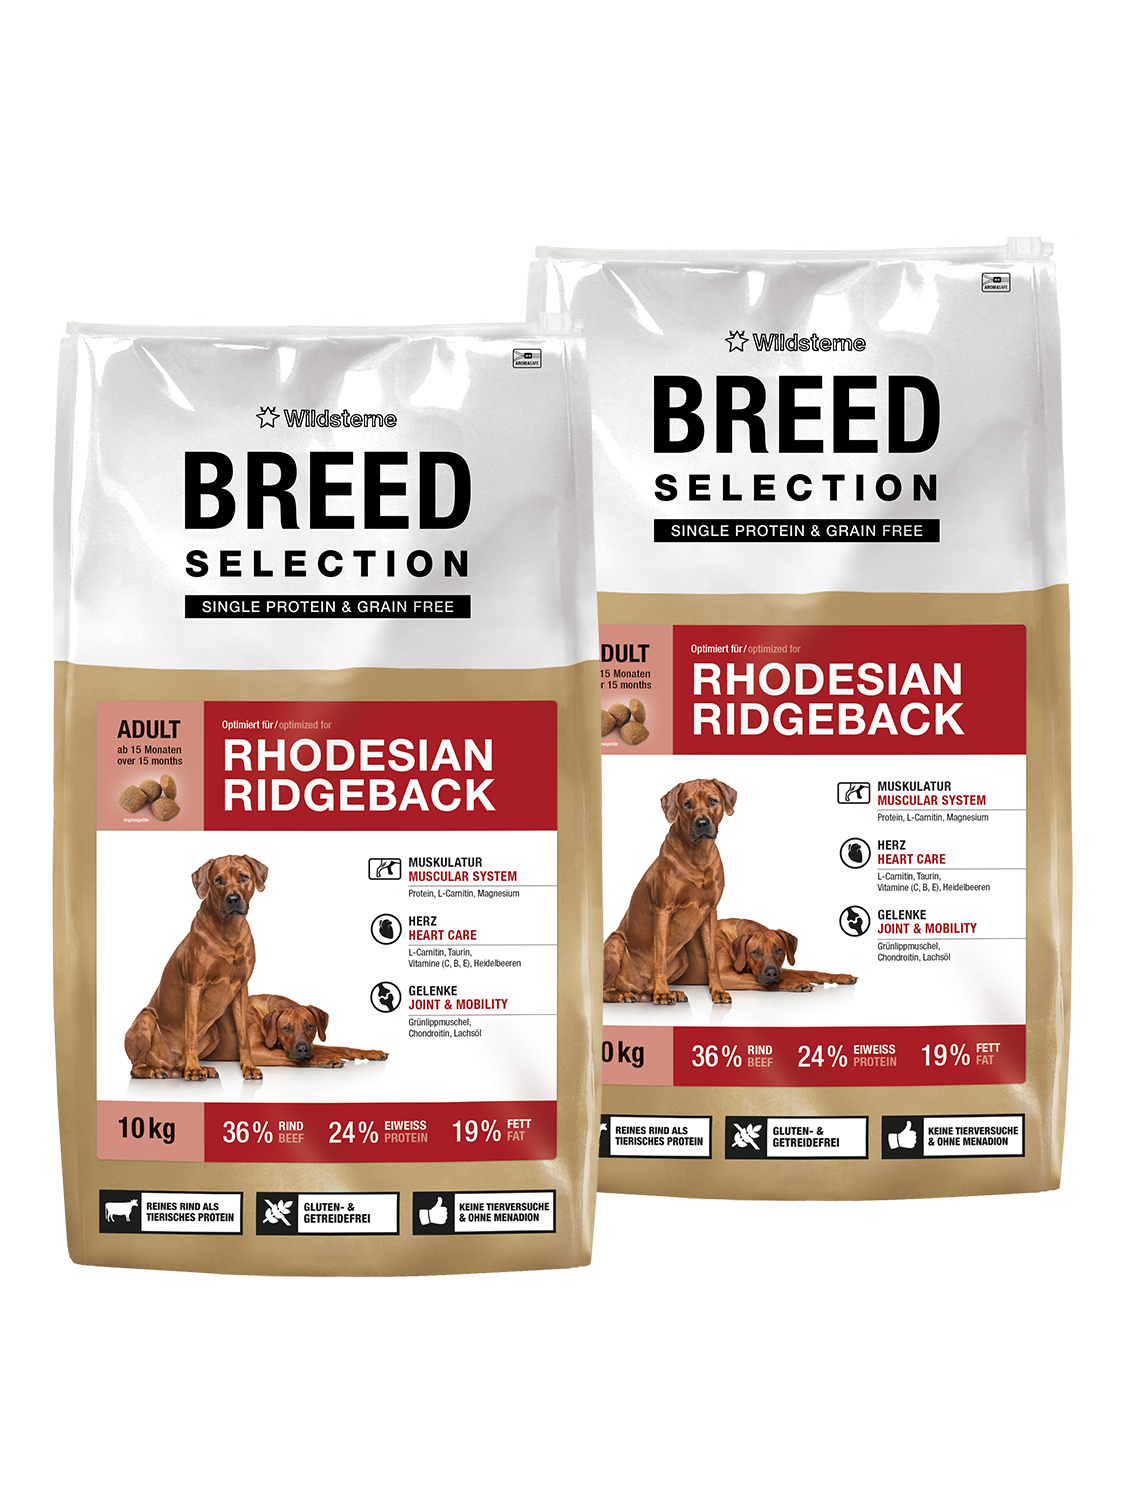 Vorteilspack Breed Selection Rhodesian Ridgeback 2 x 10kg